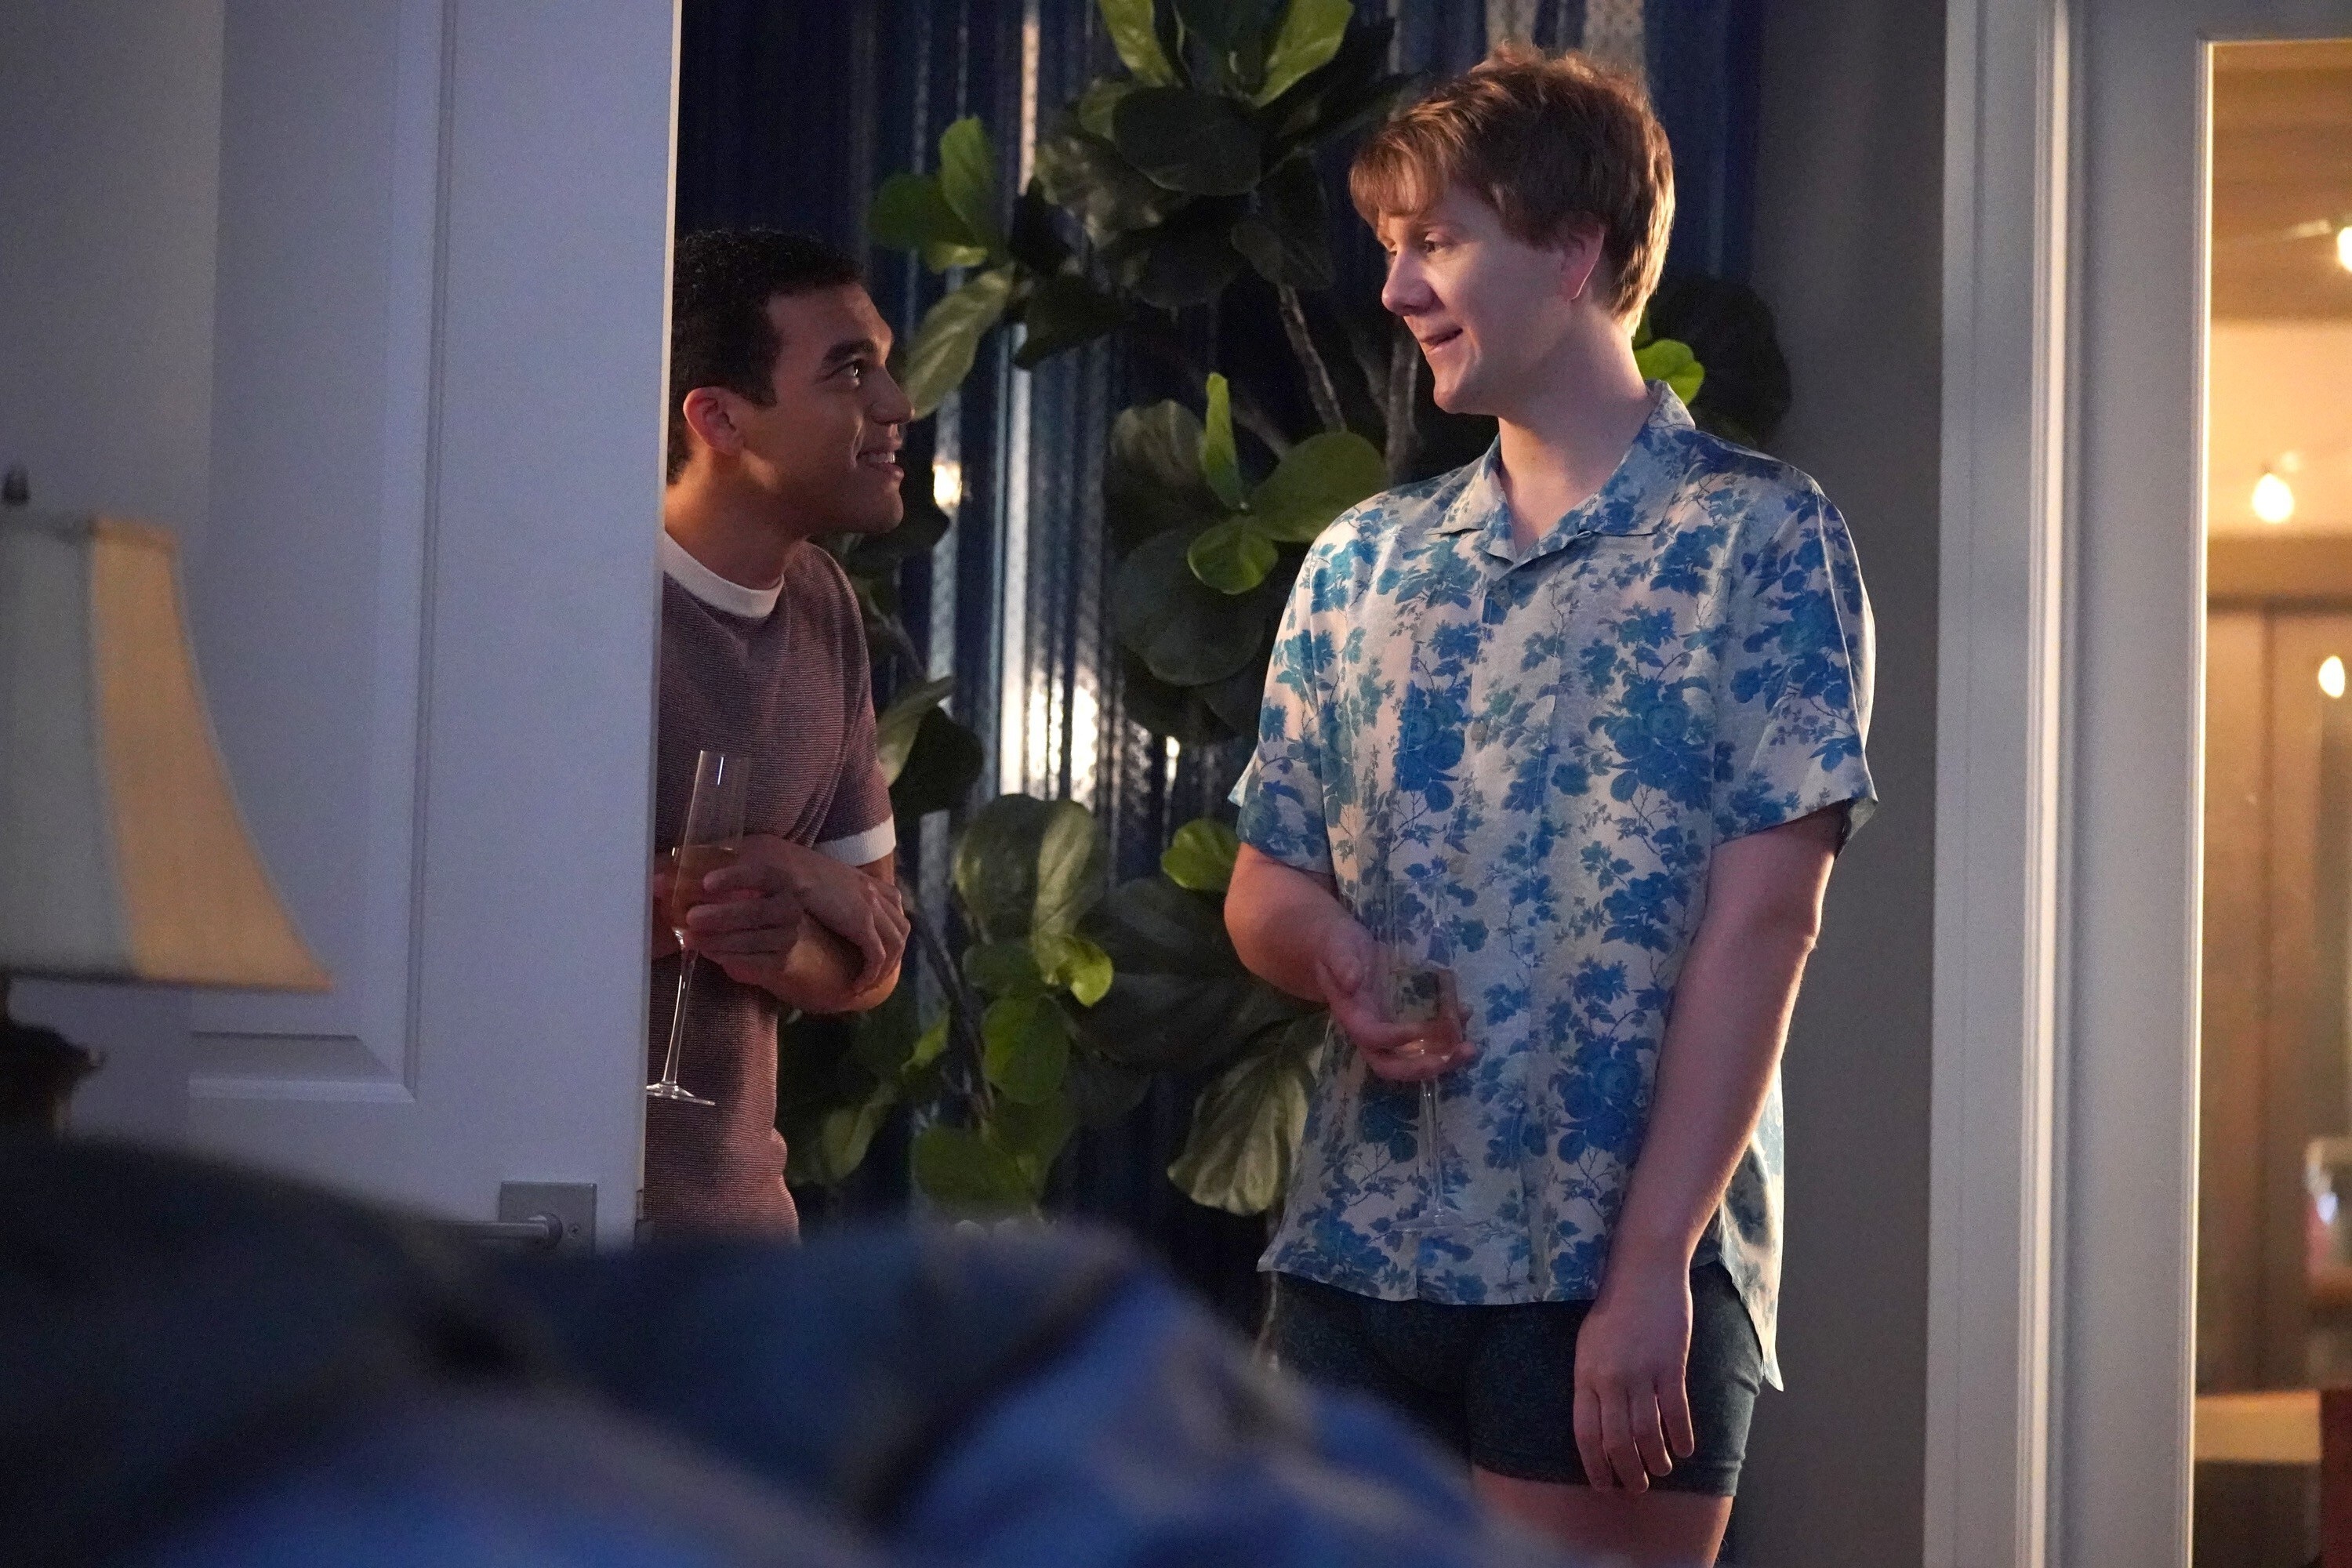 Adam Faison and Josh Thomas talk in a doorway